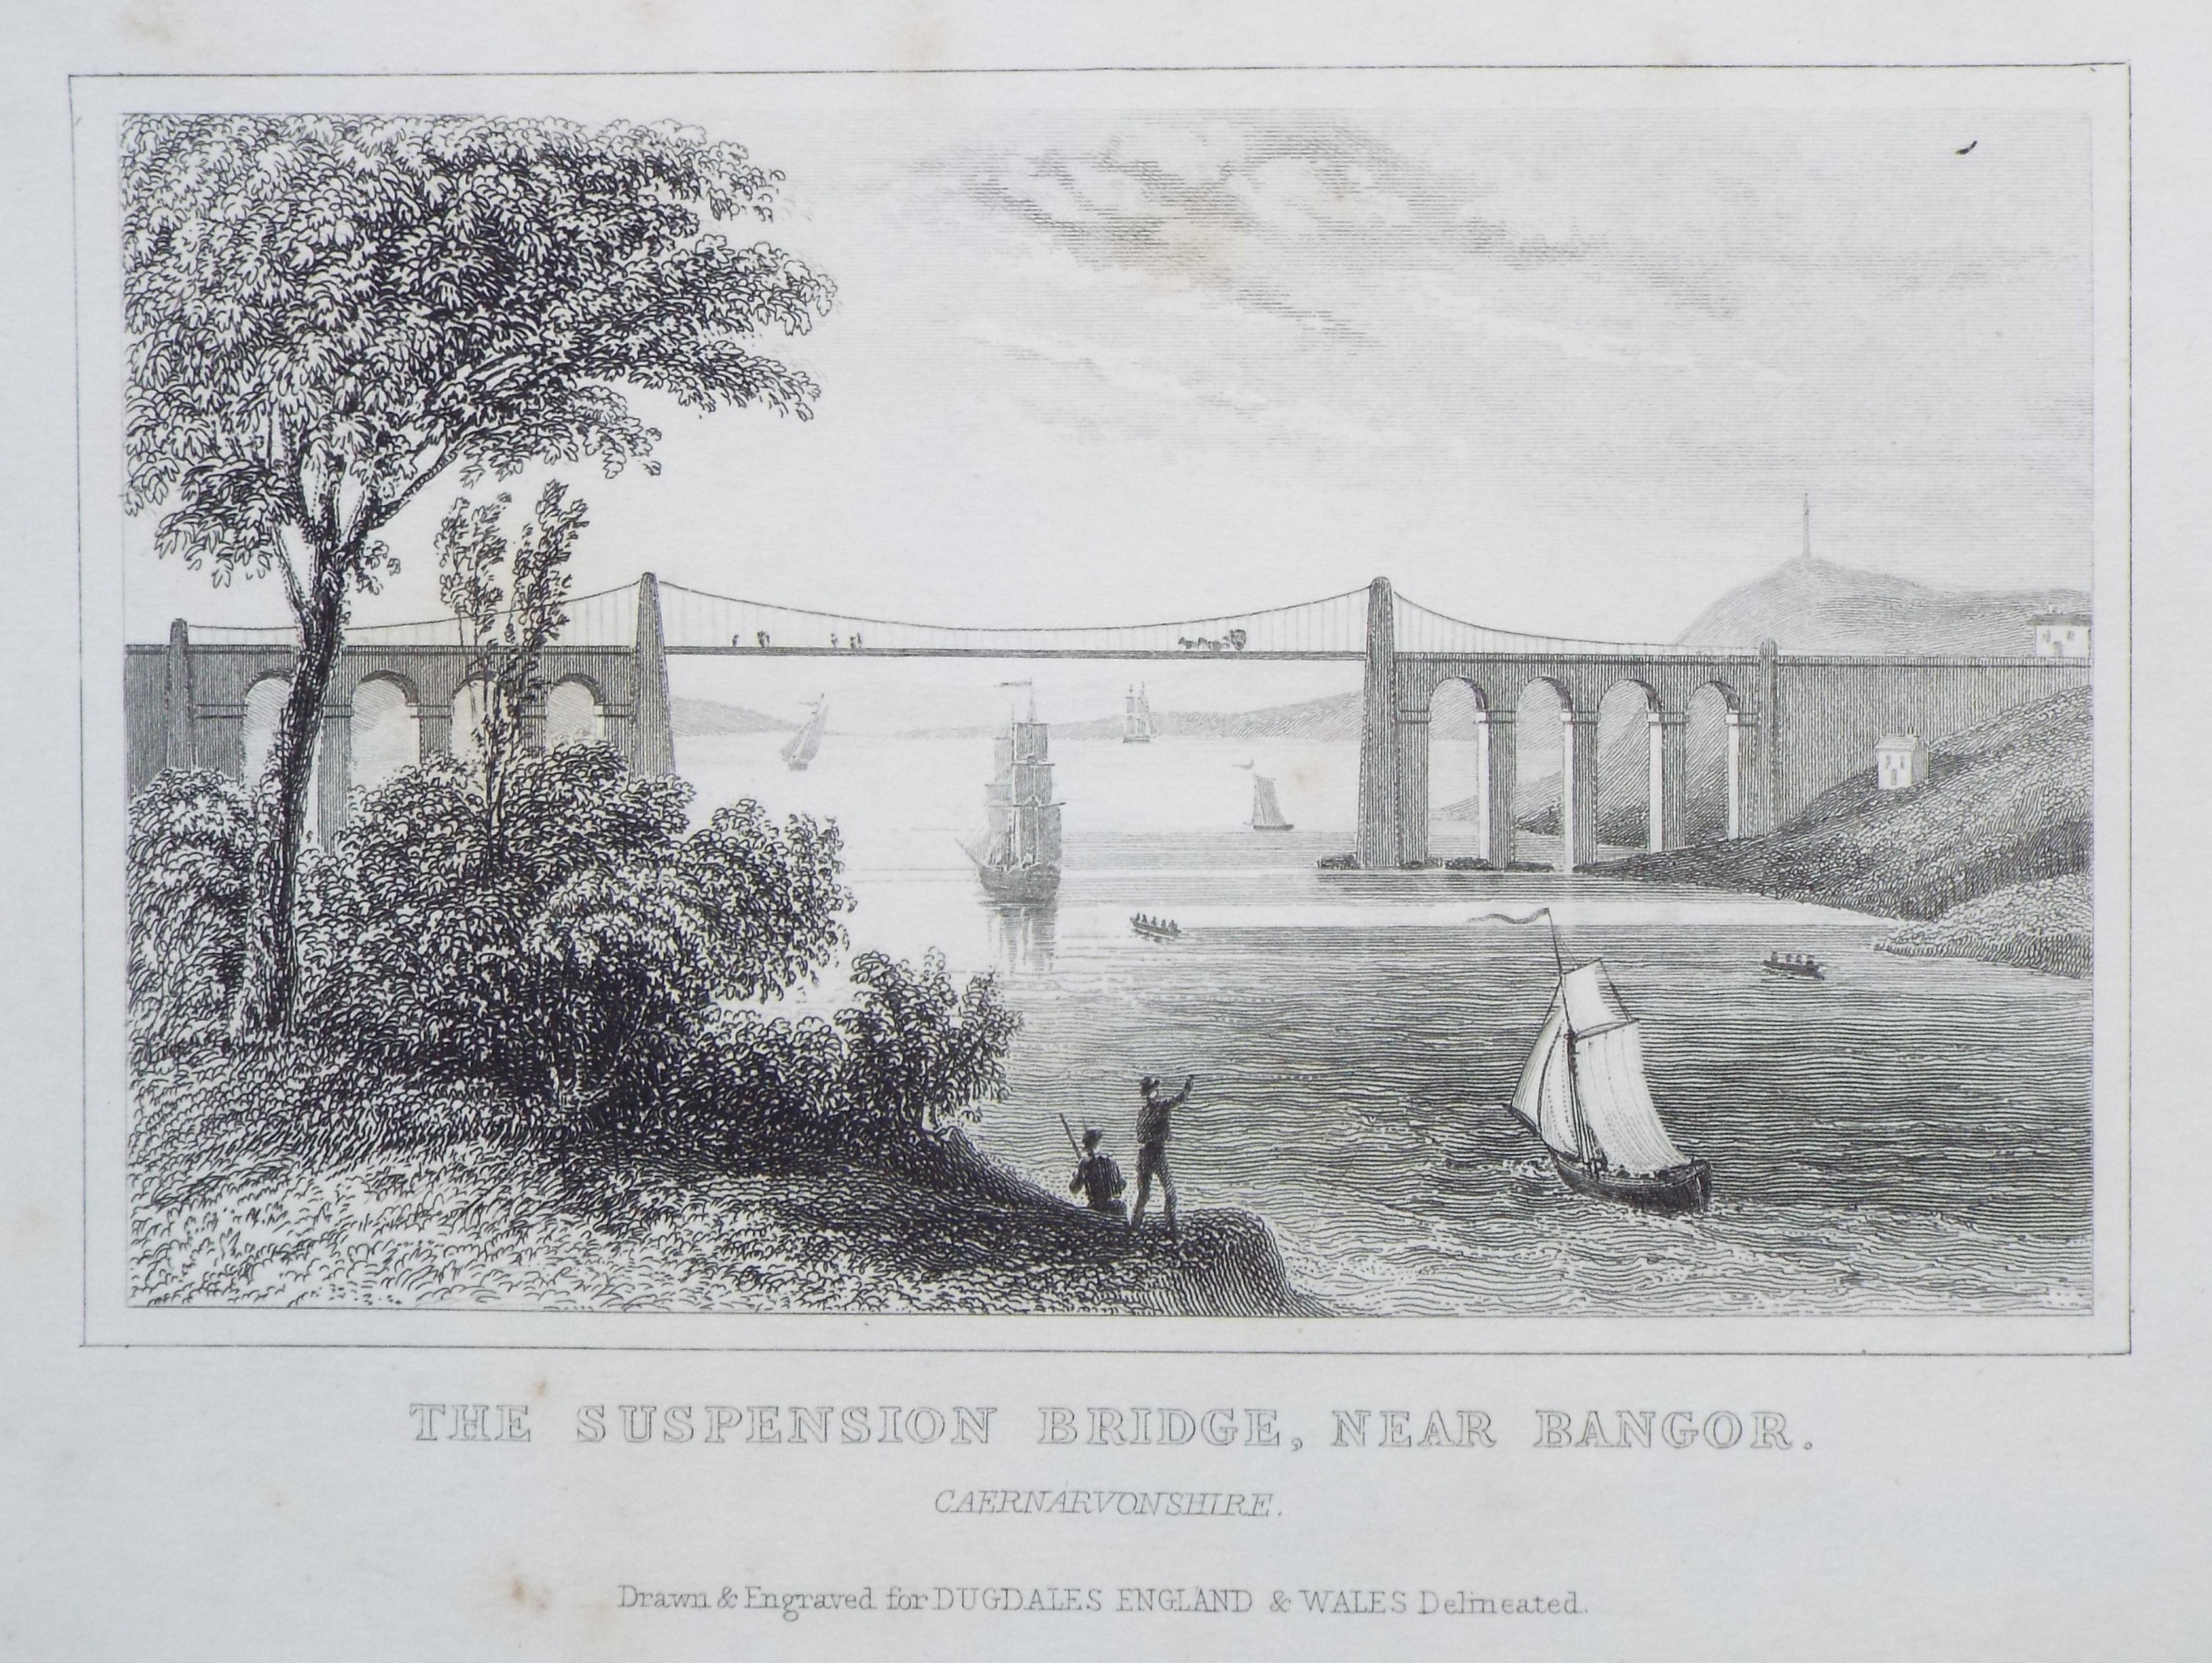 Print - The Suspension Bridge, near Bangor. Caernarvonshire.